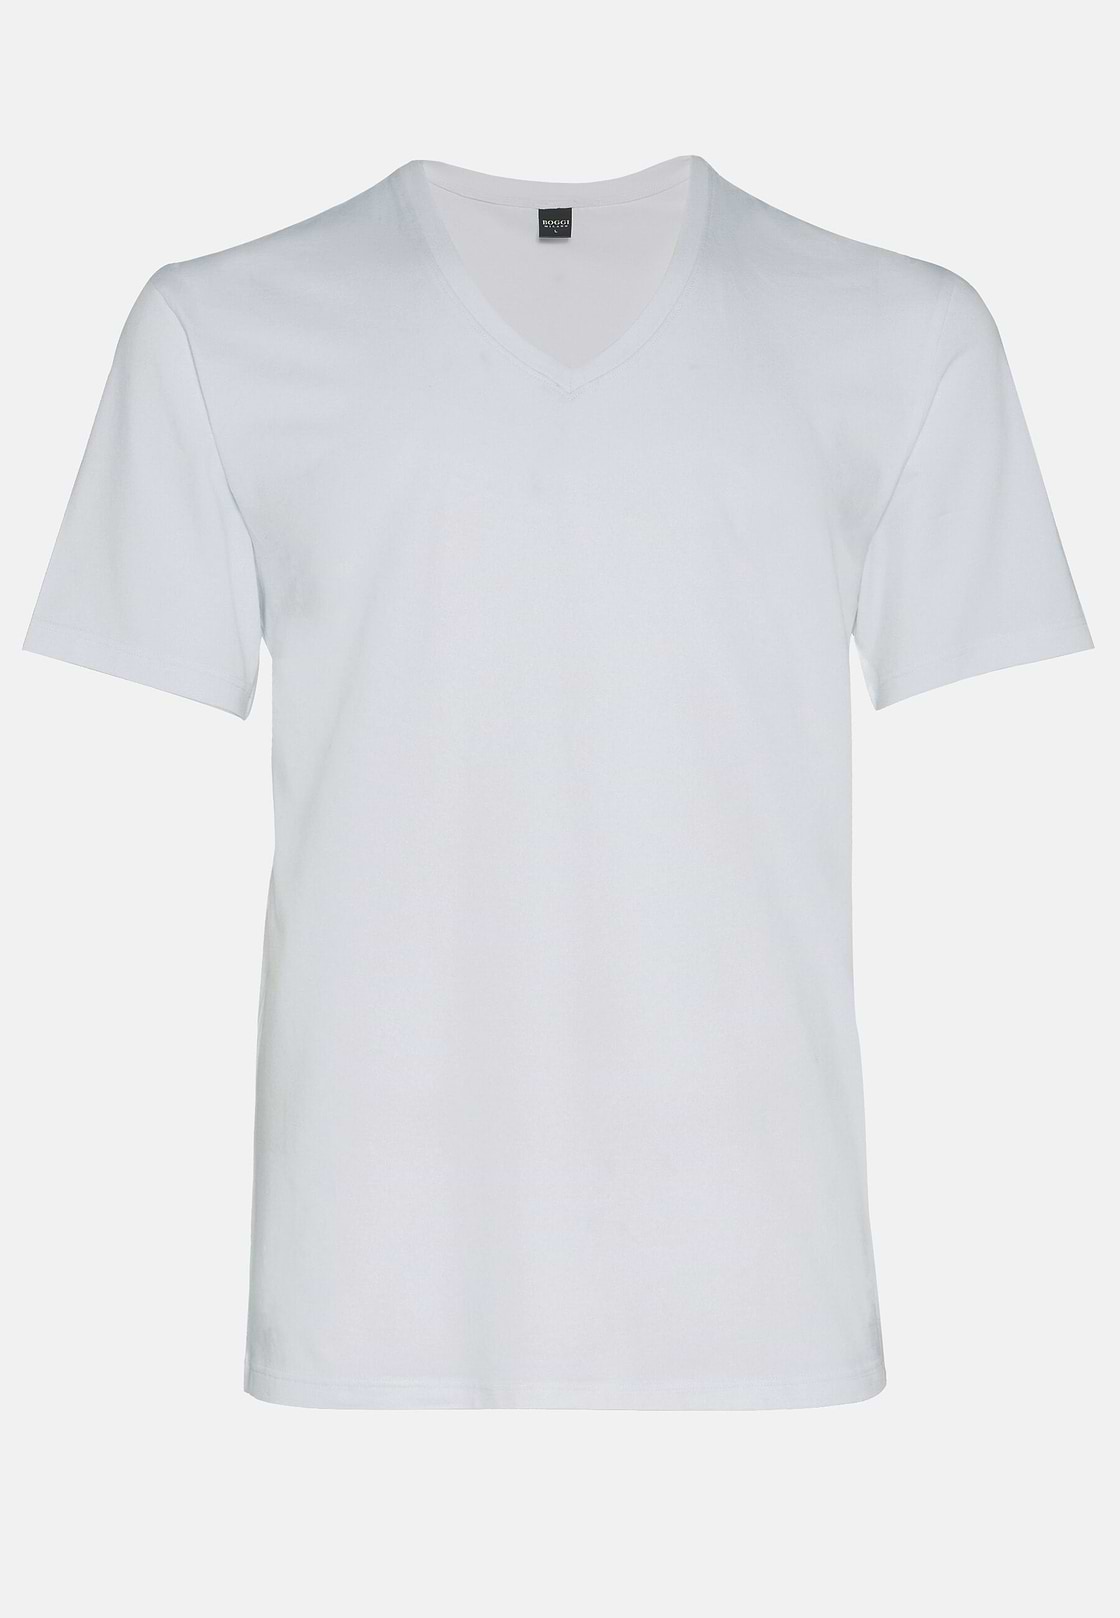 Stretch Cotton Jersey T-shirt, White, hi-res